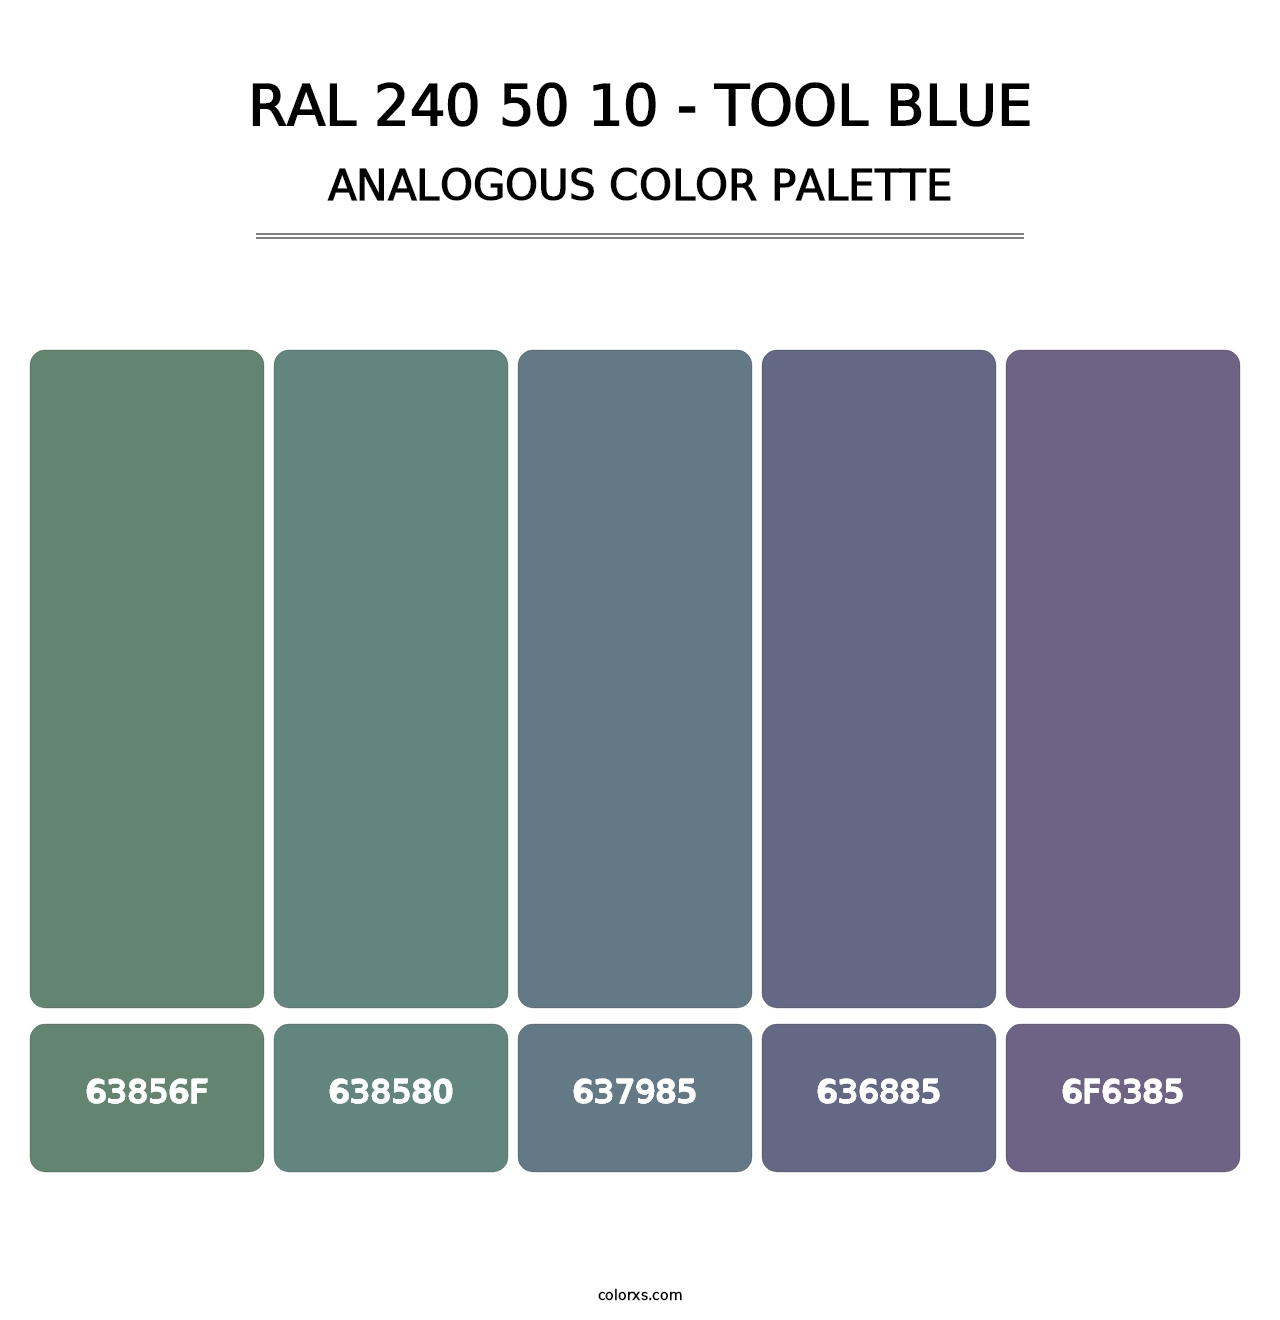 RAL 240 50 10 - Tool Blue - Analogous Color Palette